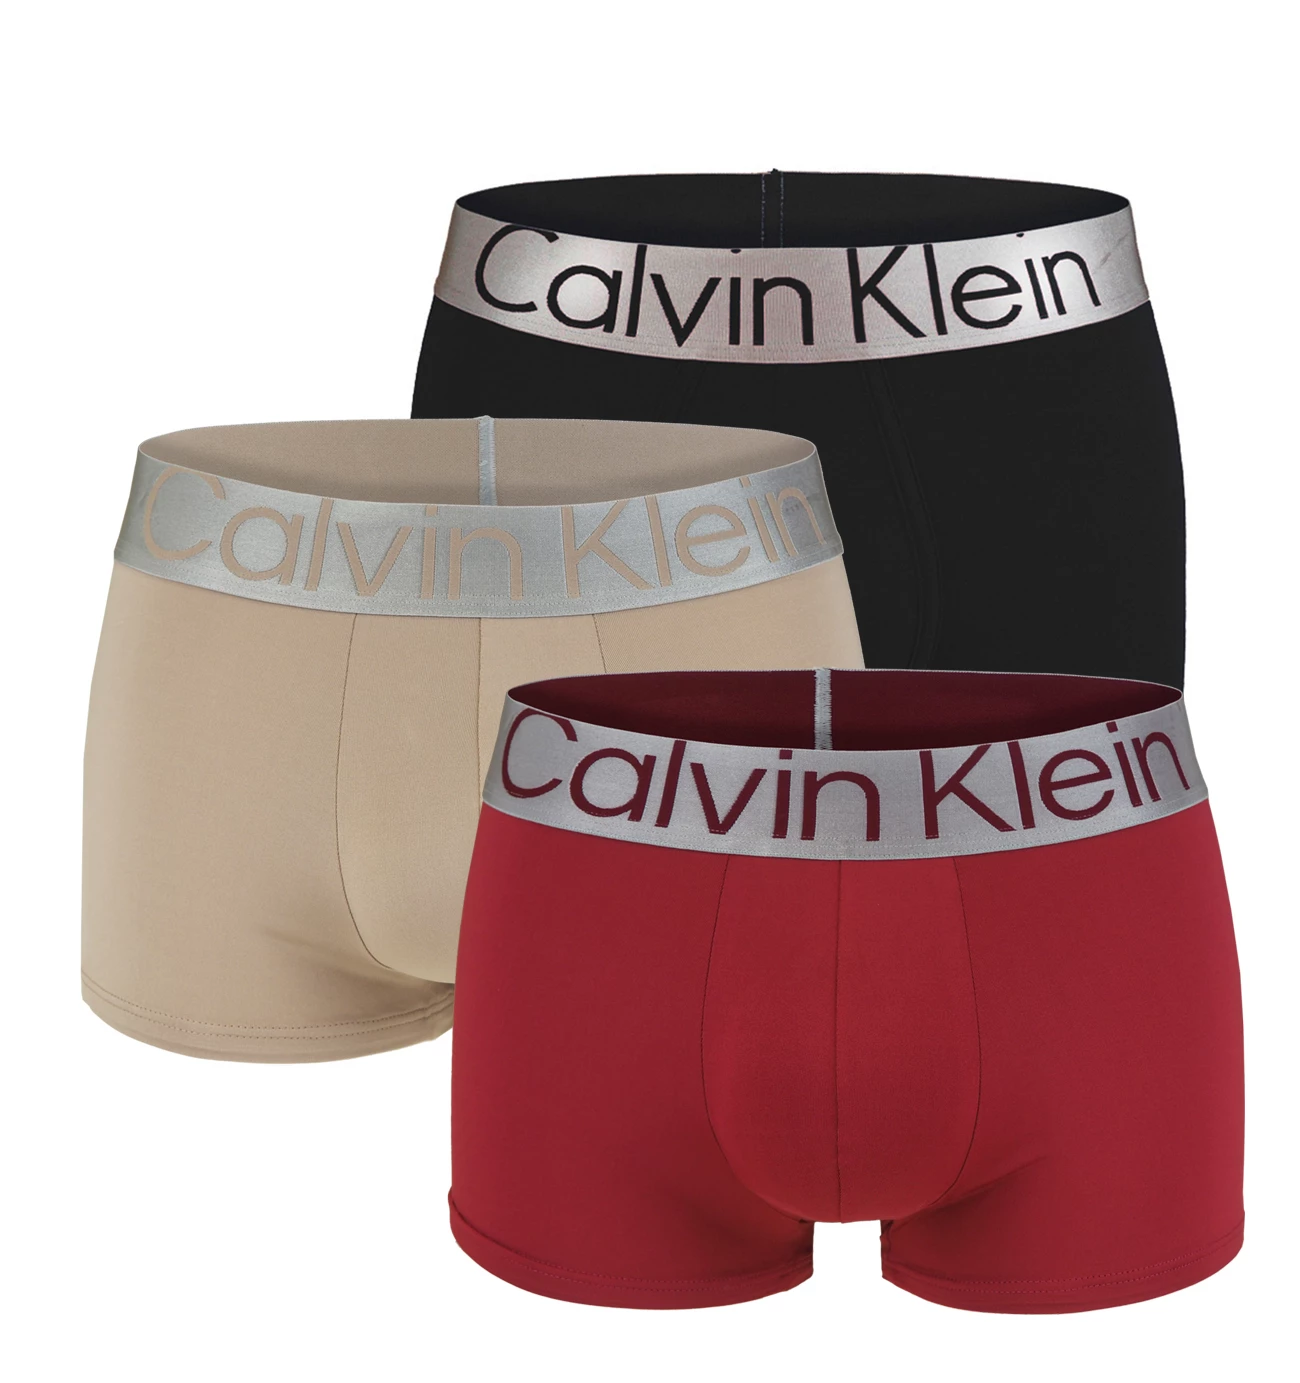 CALVIN KLEIN - boxerky 3PACK steel micro royal multicolor - limitovaná edícia